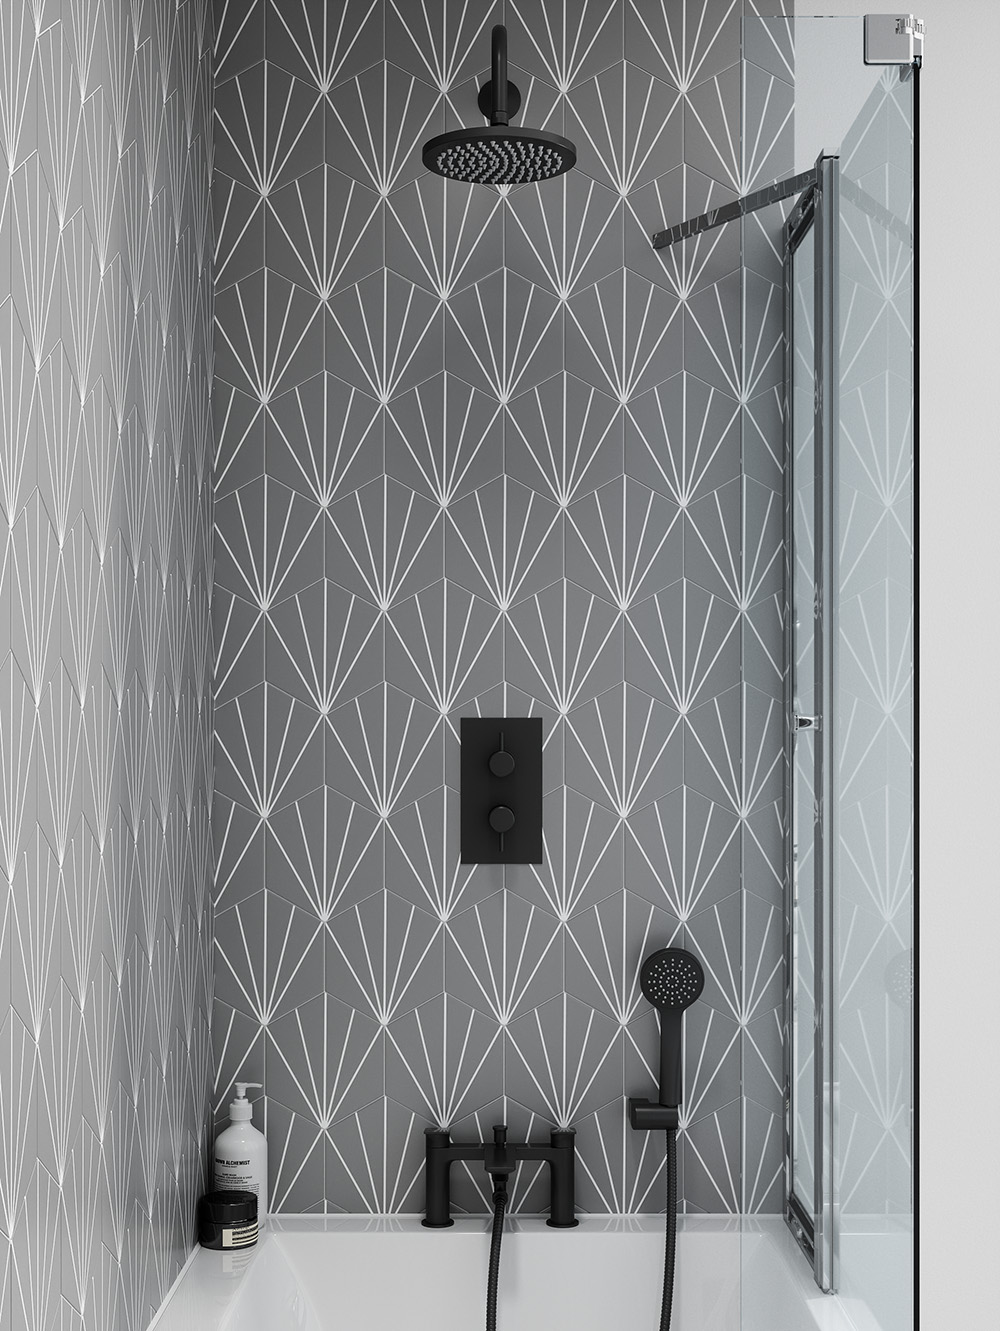 Hoxton Matt Black brassware in a monochrome bathroom design 